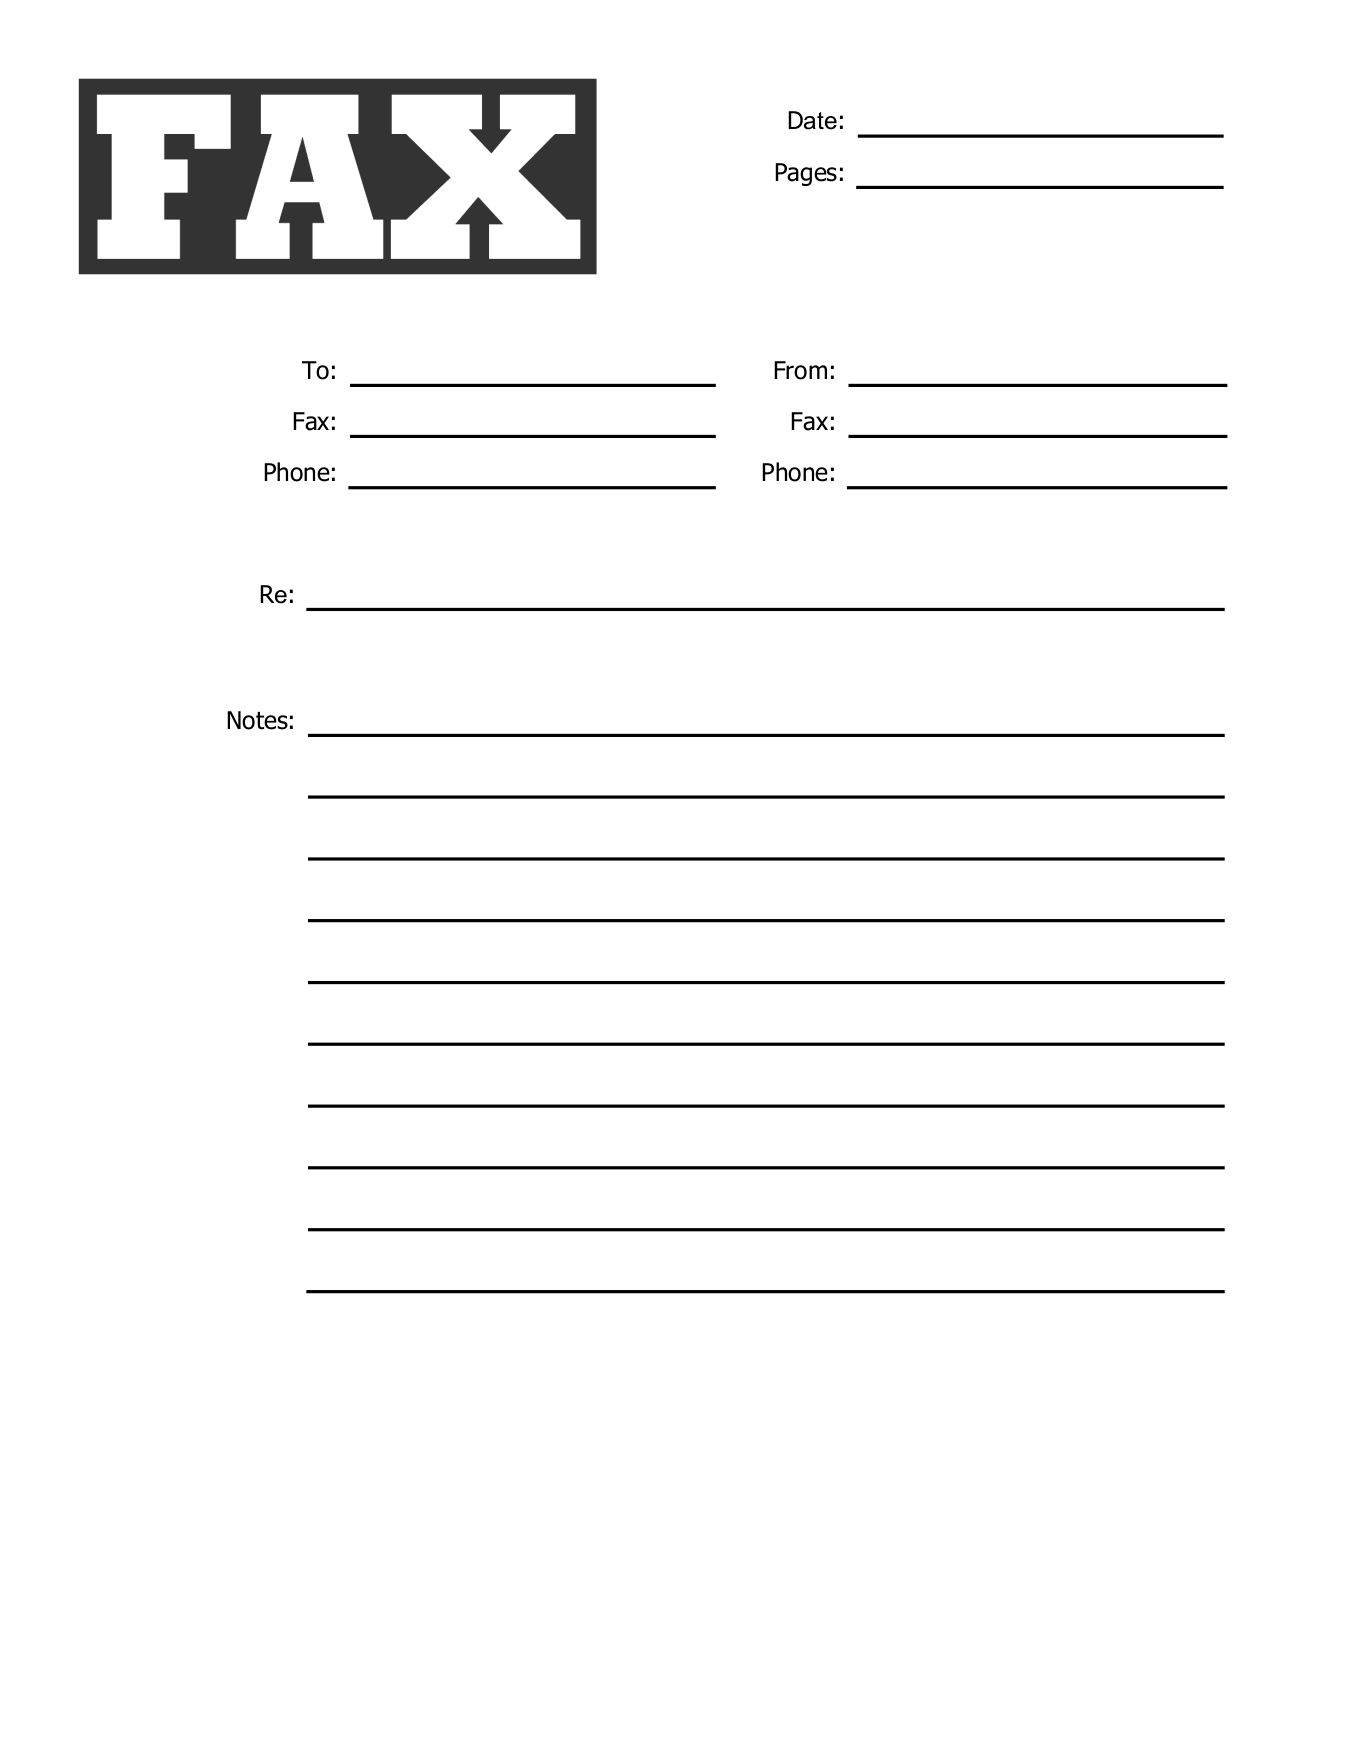 generic-fax-cover-sheet-word-sinpilot